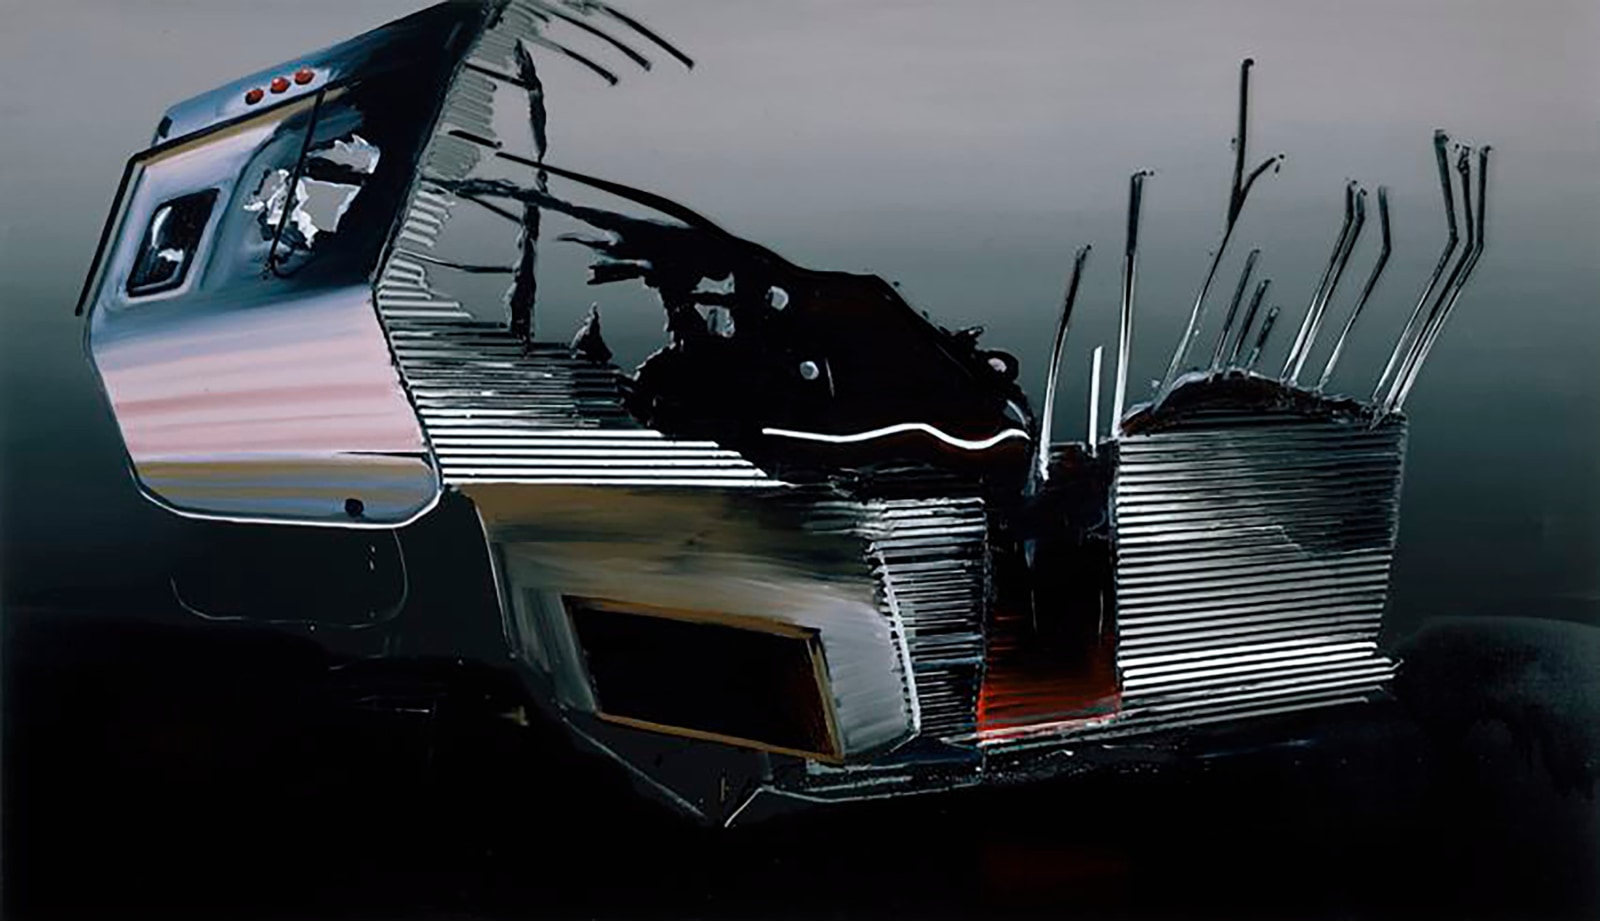 Dirk Skreber, Crystella 2, 2006, Oil on canvas, 74.8 x 129.9 inches